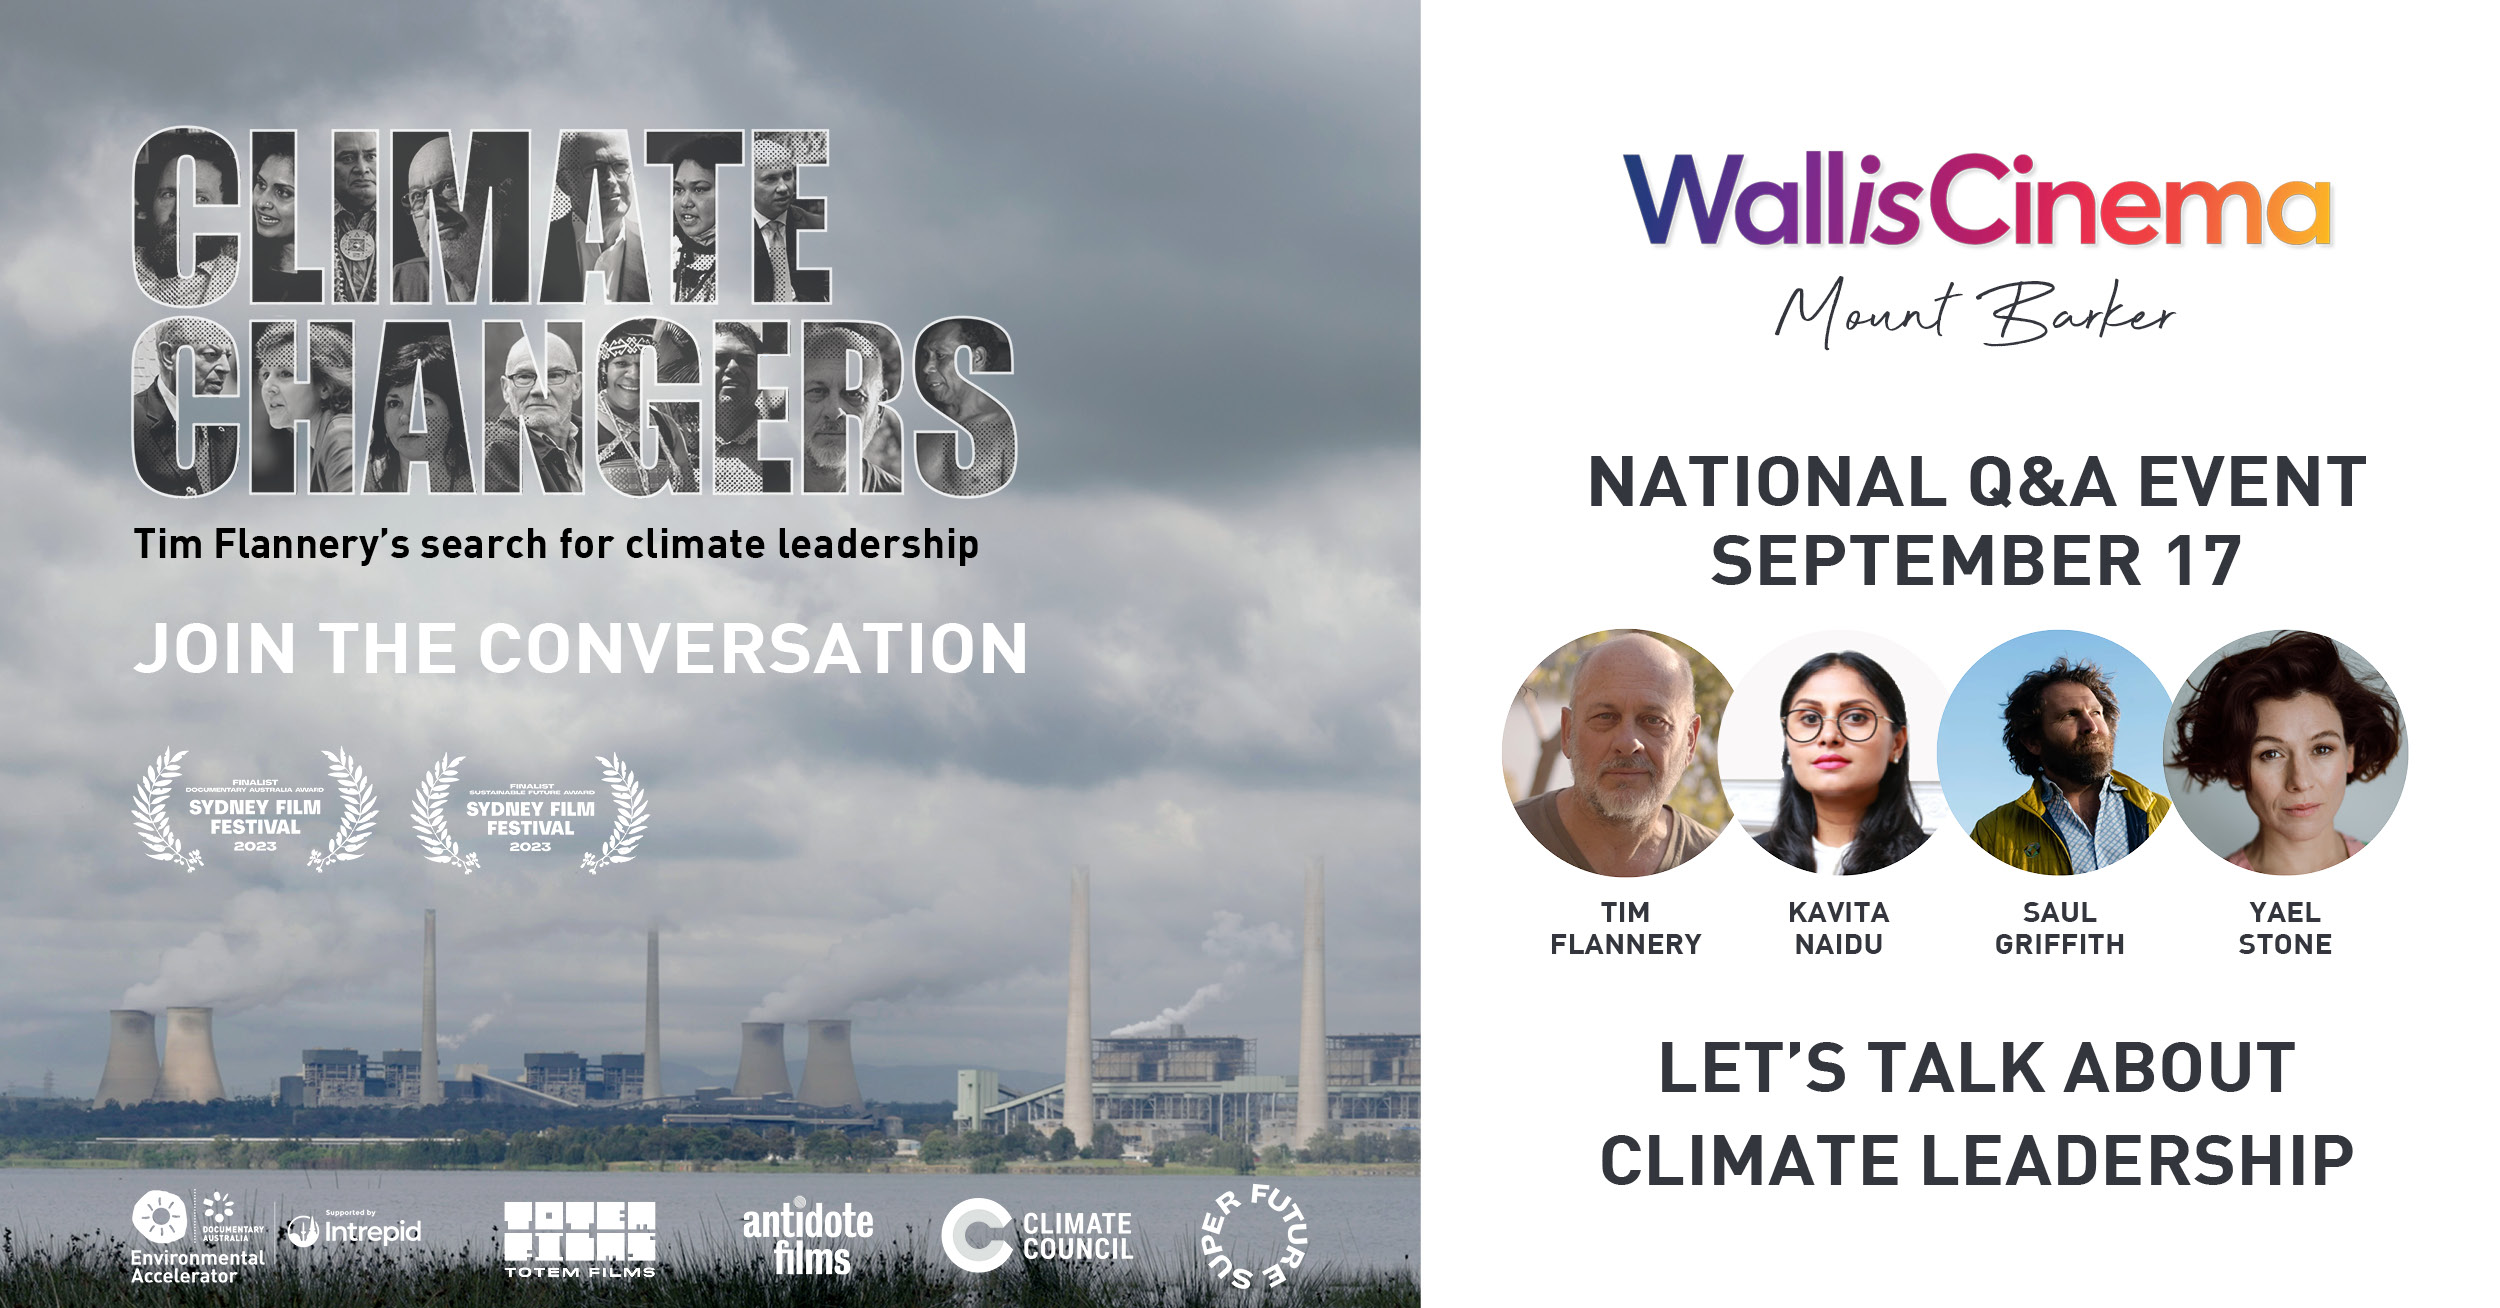 climate-changers-wallis-cinemas-mount-barker